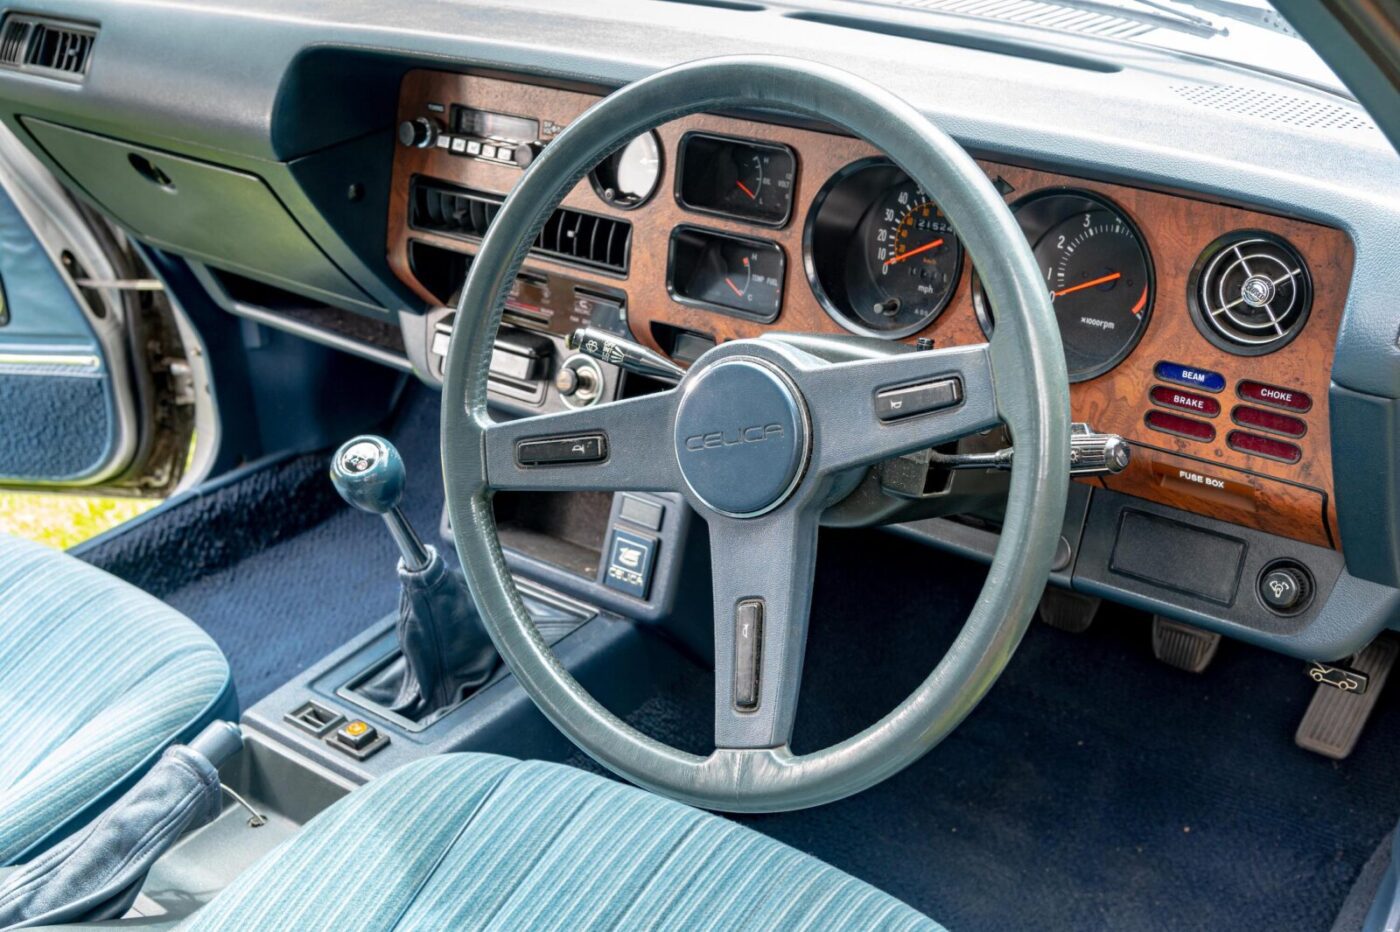 Toyota Celica ST interior